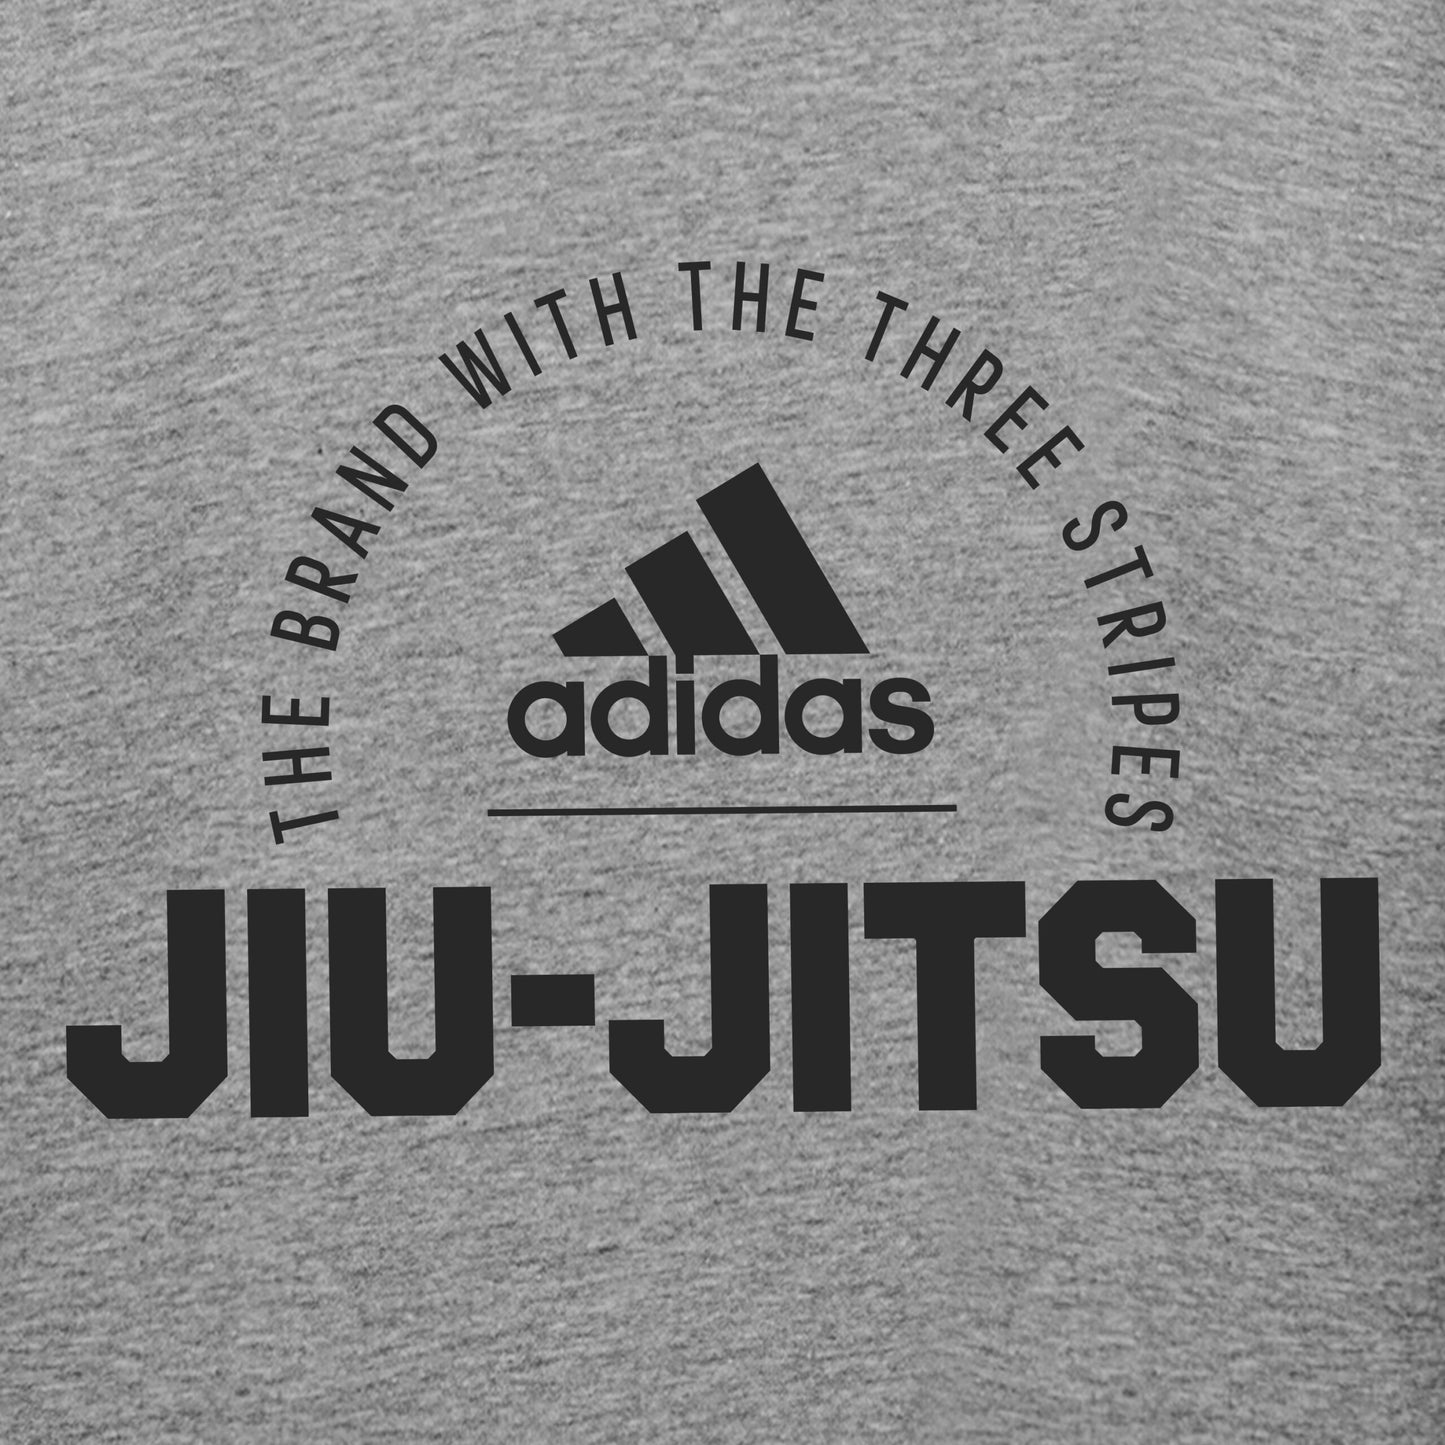 Clhd21 Bjj Adidas Community Hoody Jiu Jitsu Grey 03